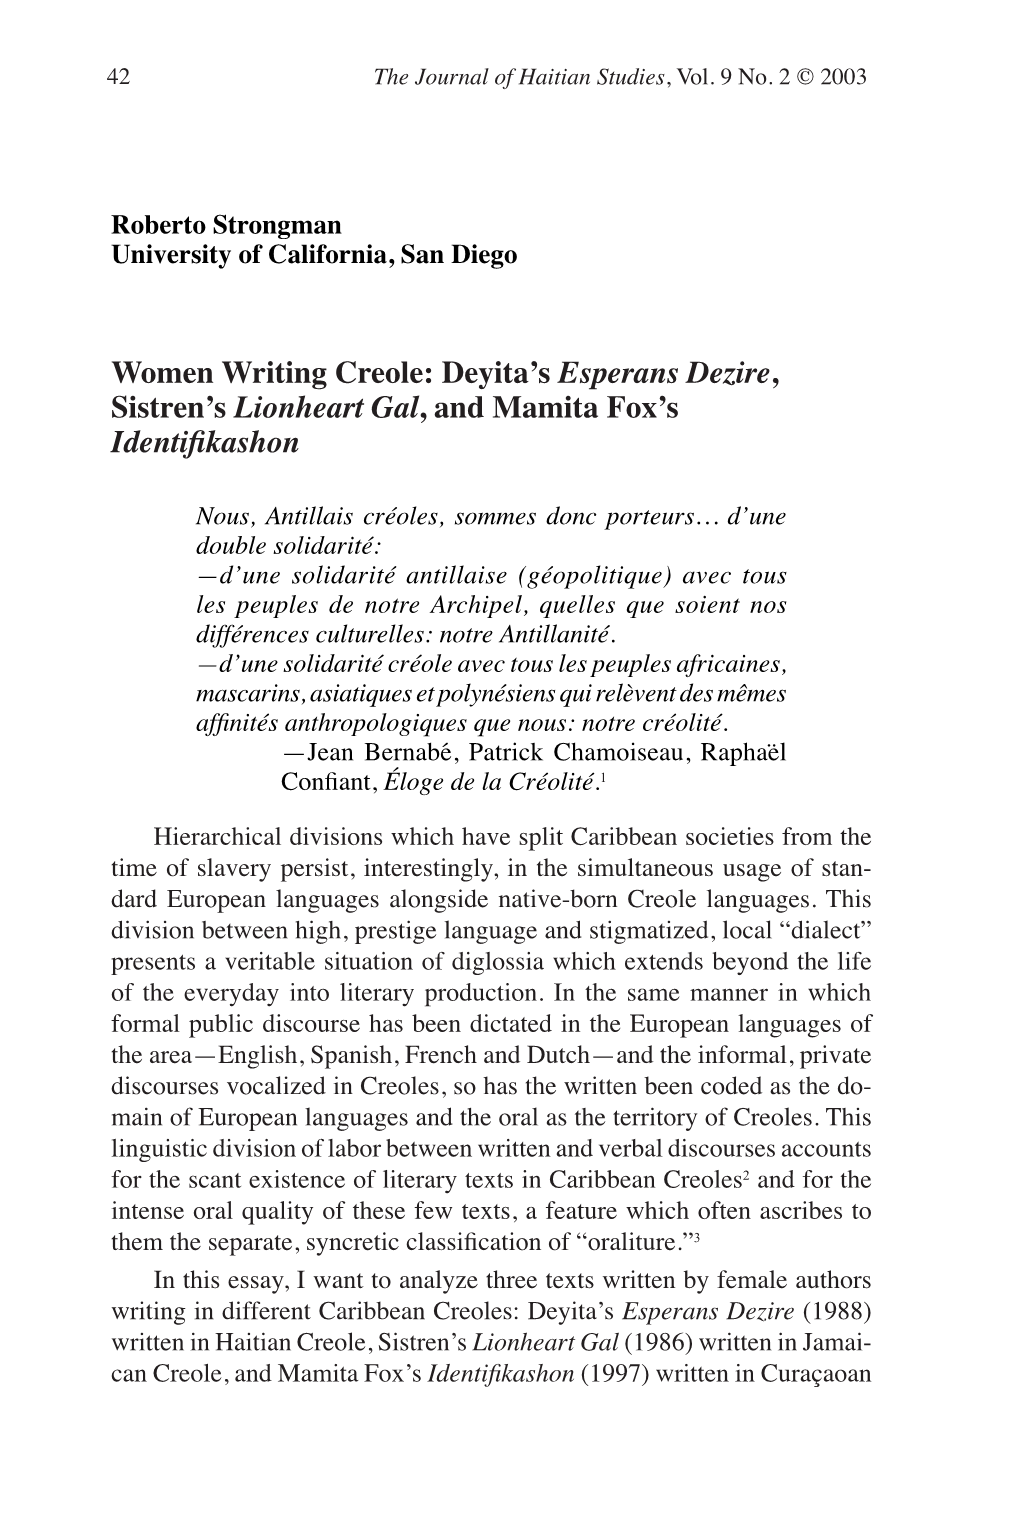 Women Writing Creole: Deyitaʼs Esperans Dezire, Sistrenʼs Lionheart Gal, and Mamita Foxʼs Identifikashon